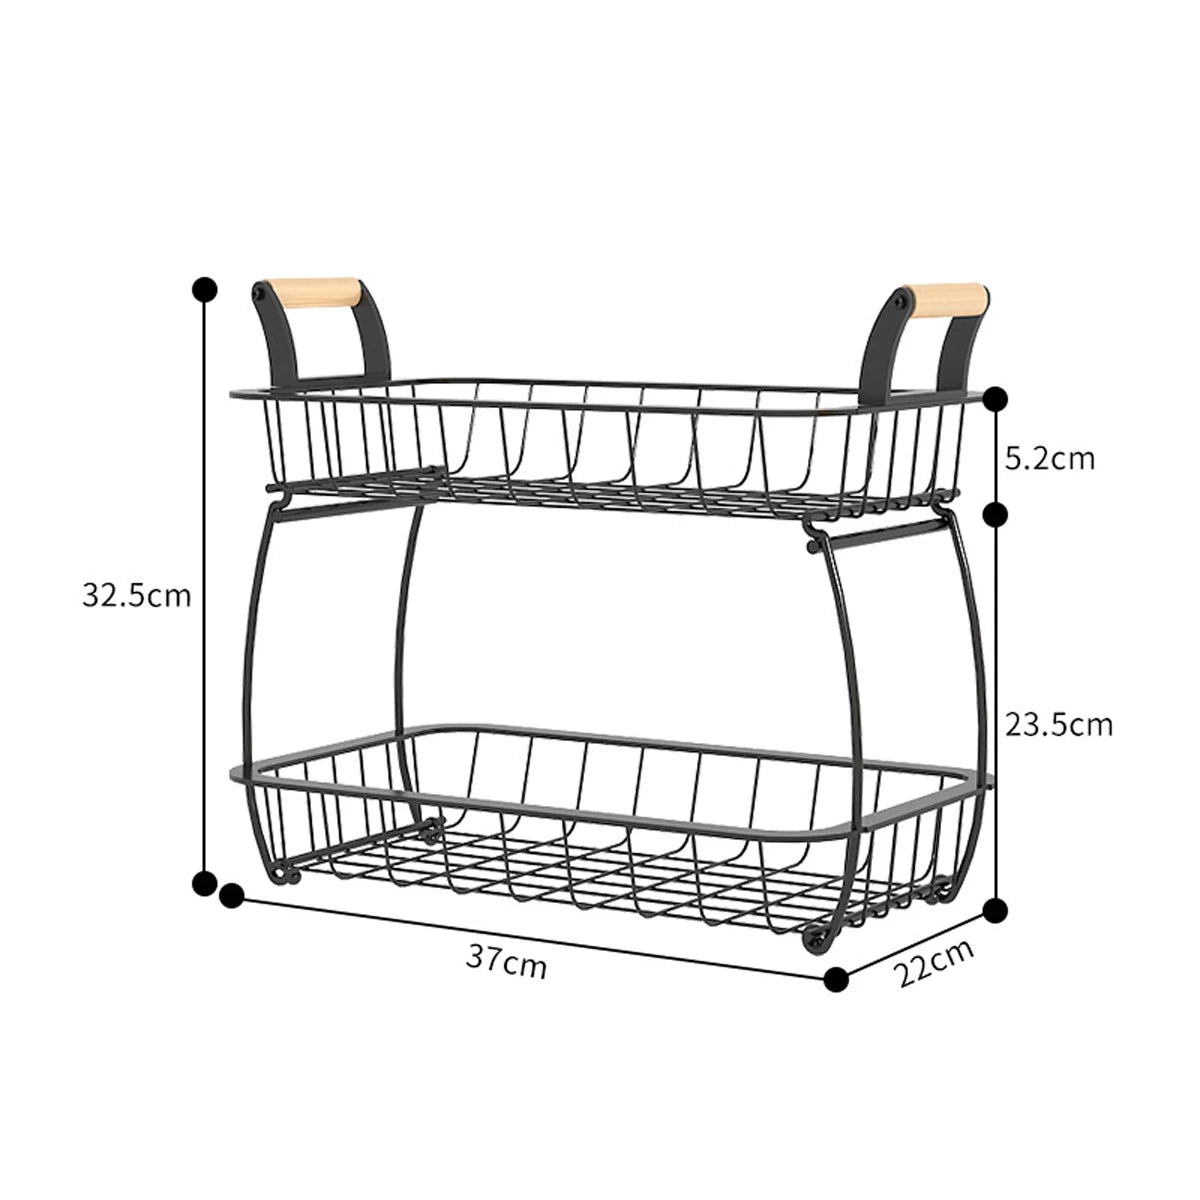 2 Tier Fruit Storage Basket Countertop for Kitchen, Vegetable Fruit Basket Stand Detachable Metal Wire Basket with Wooden Handle